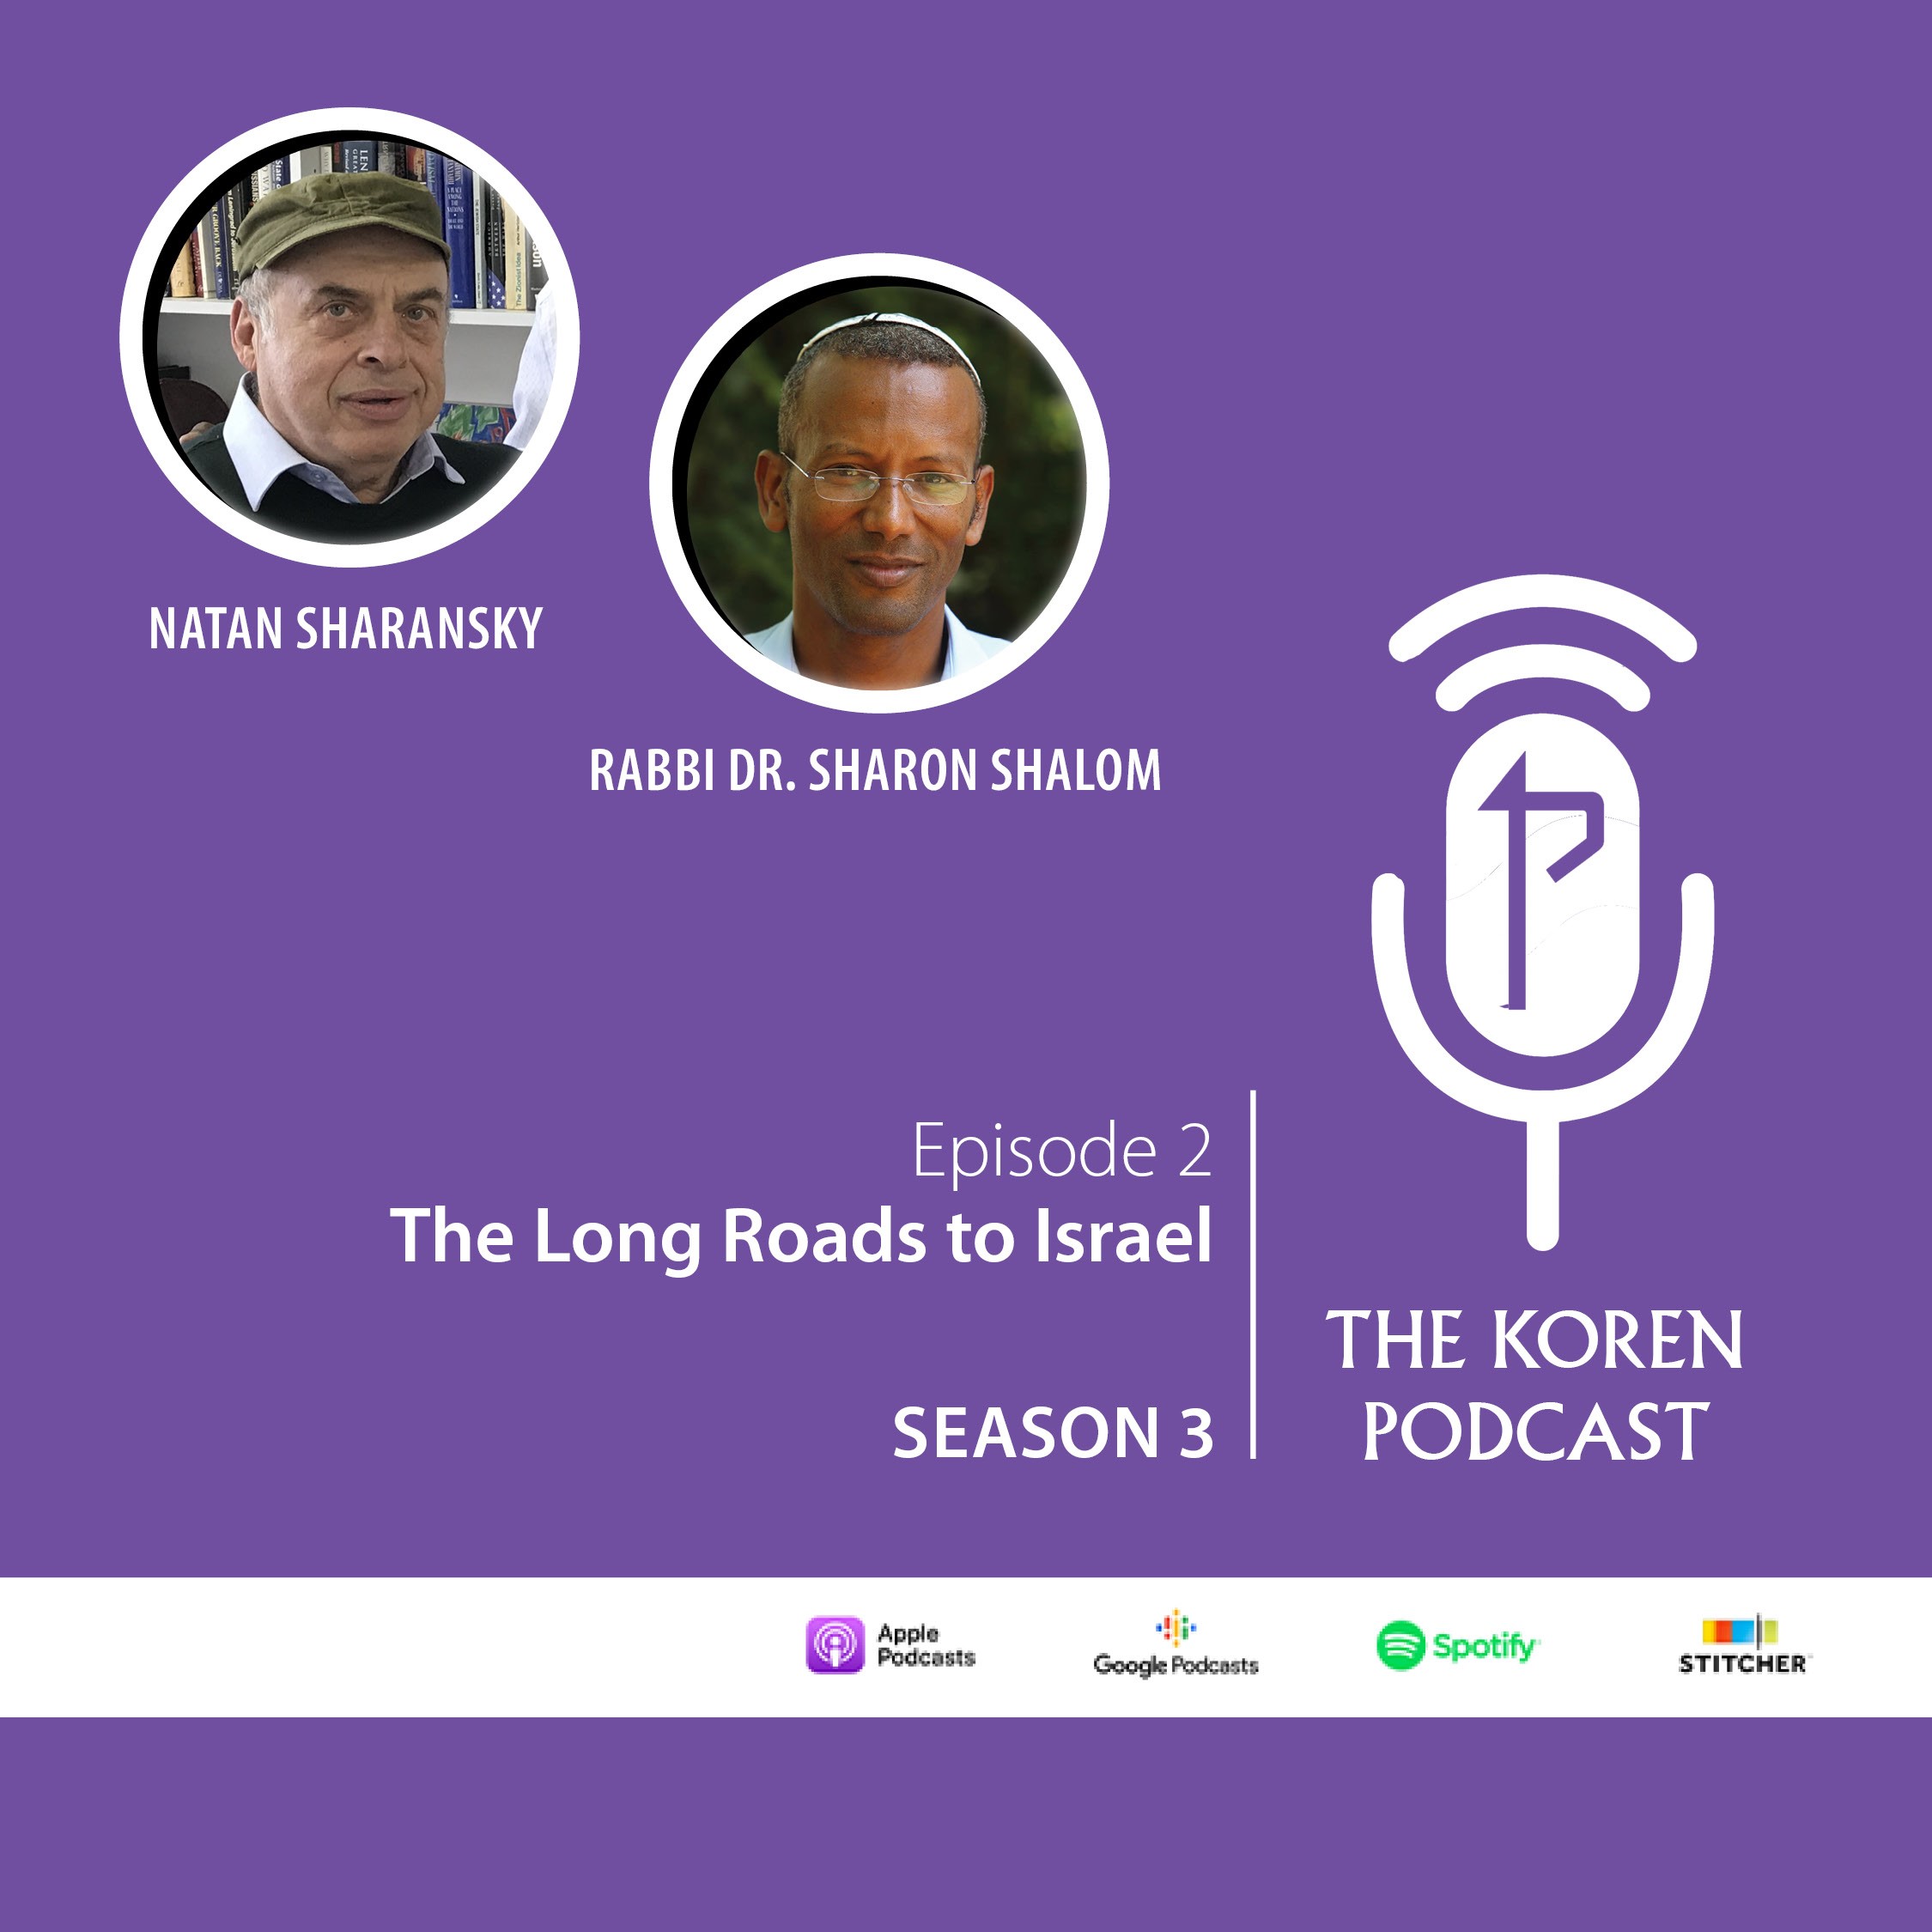 The Long Roads to Israel with Rabbi Dr. Sharon Shalom and Natan Sharansky